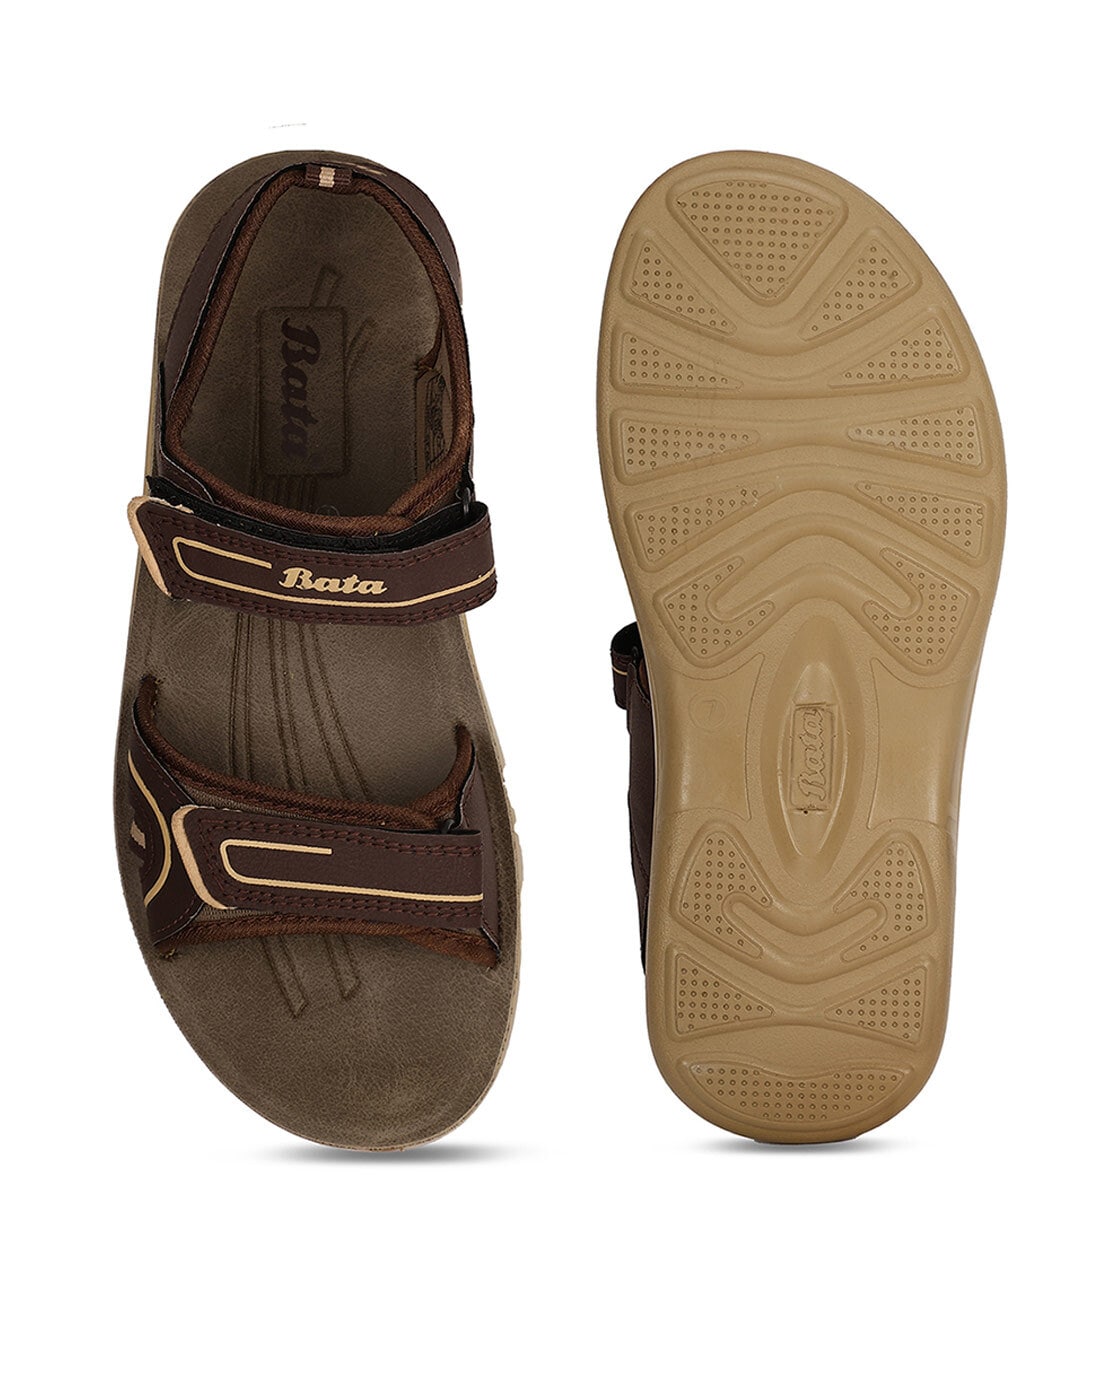 Details 88+ bata velcro sandals super hot